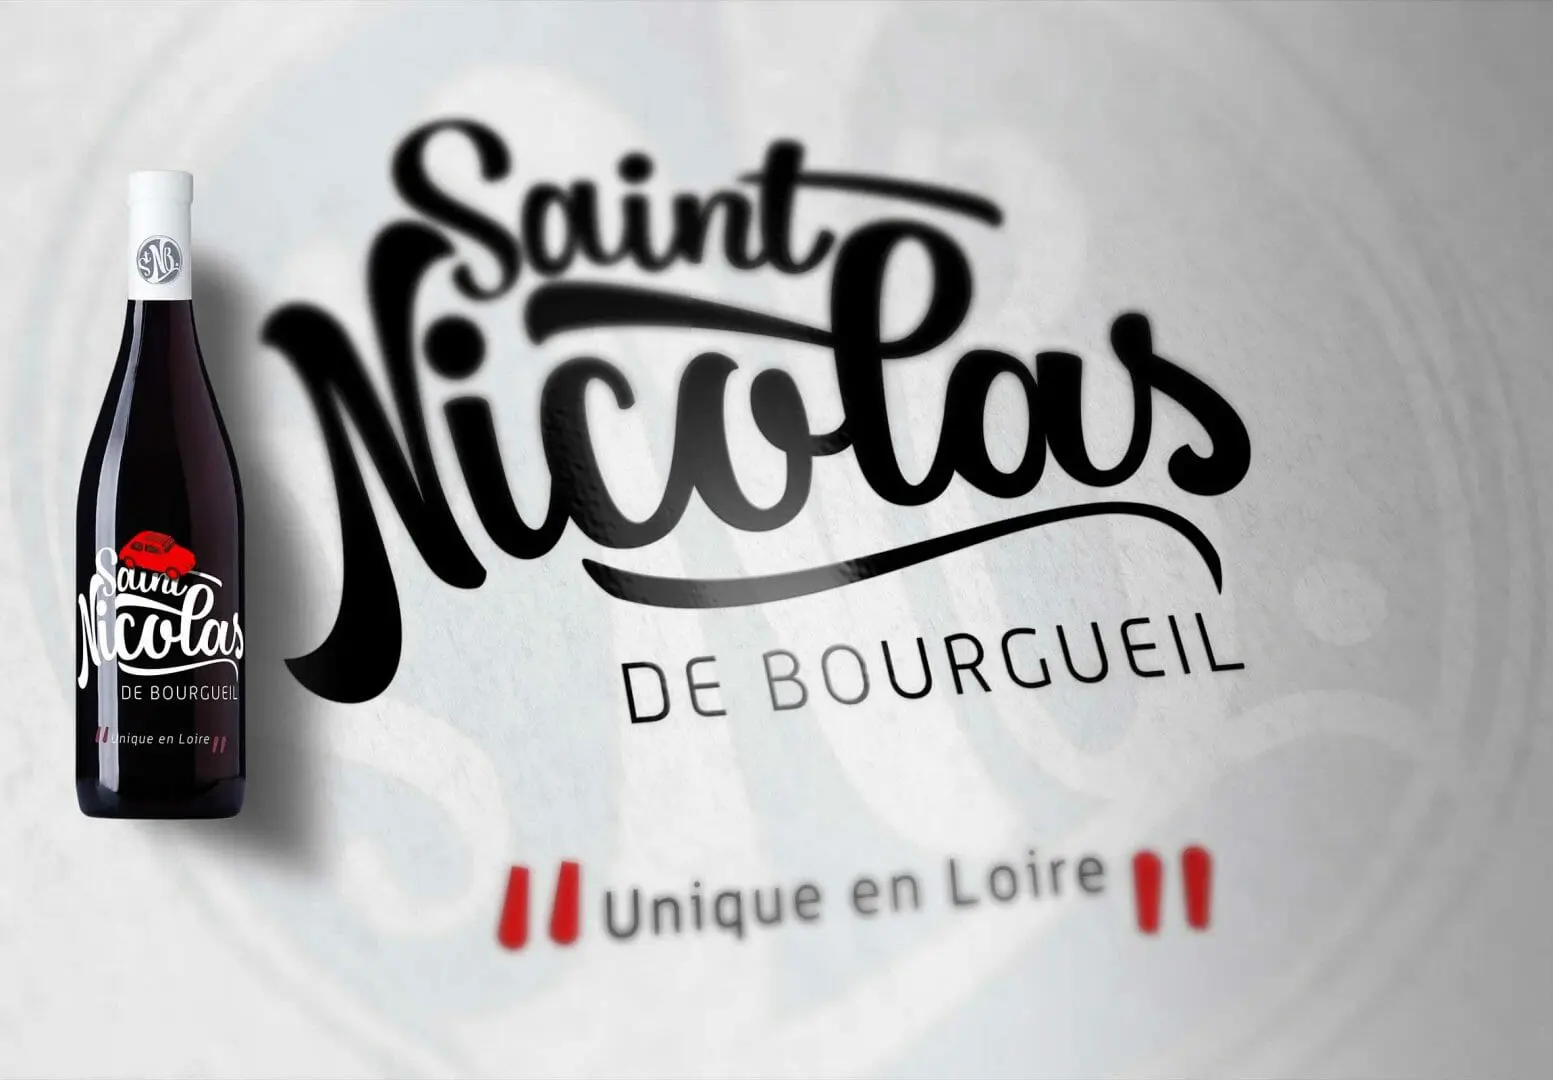 The identity of the Saint Nicolas de Bourgueil appellation